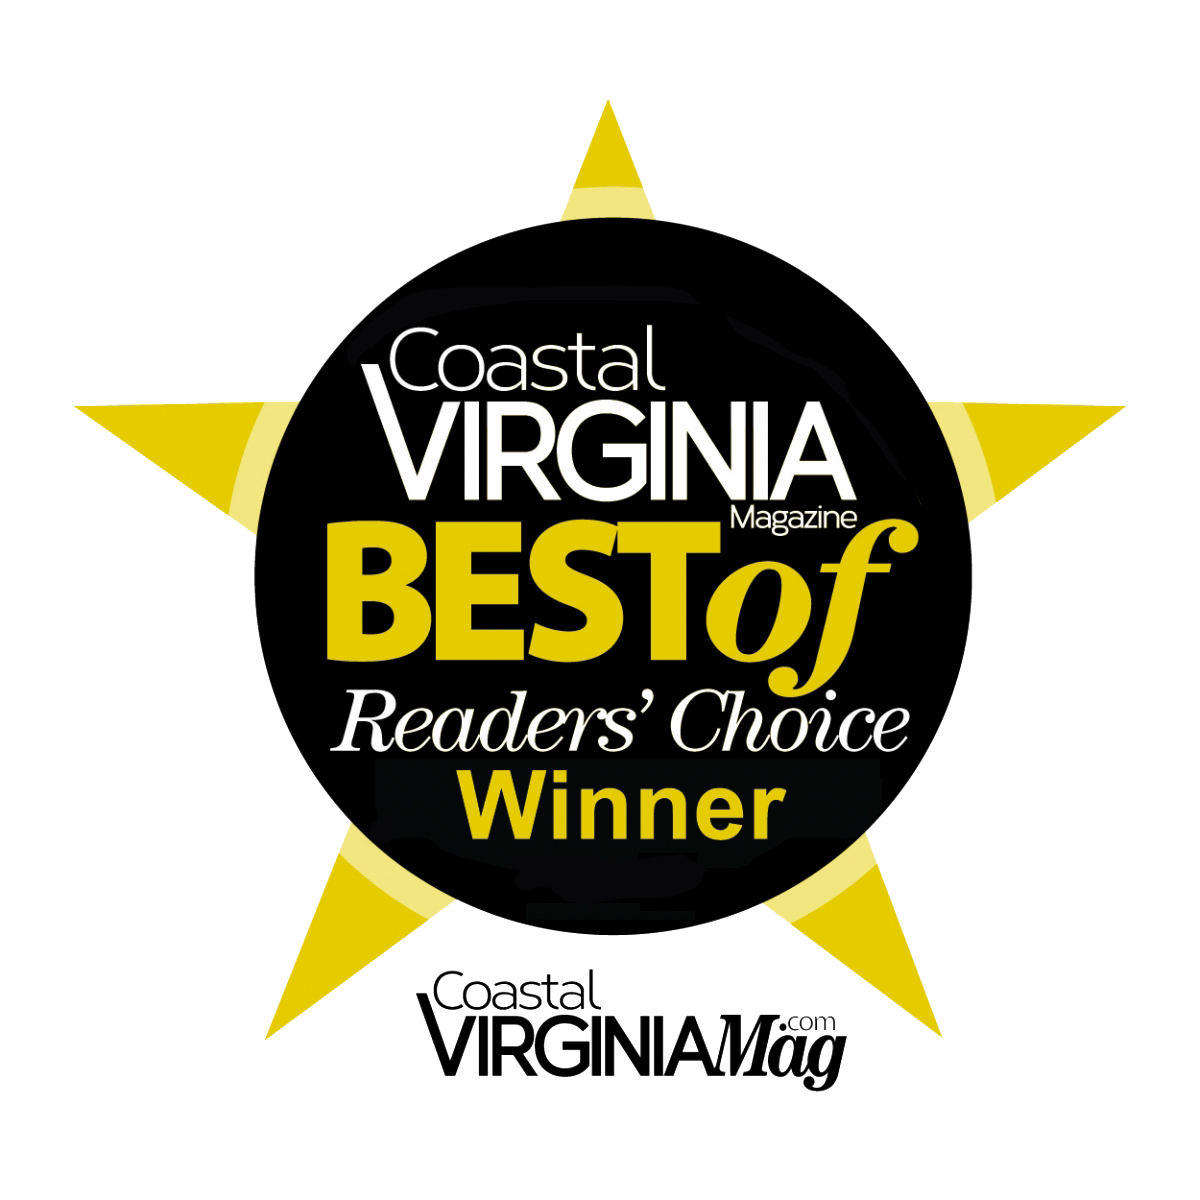 Coastal Virginia Magazine "Best Of" Readers Choice Winner